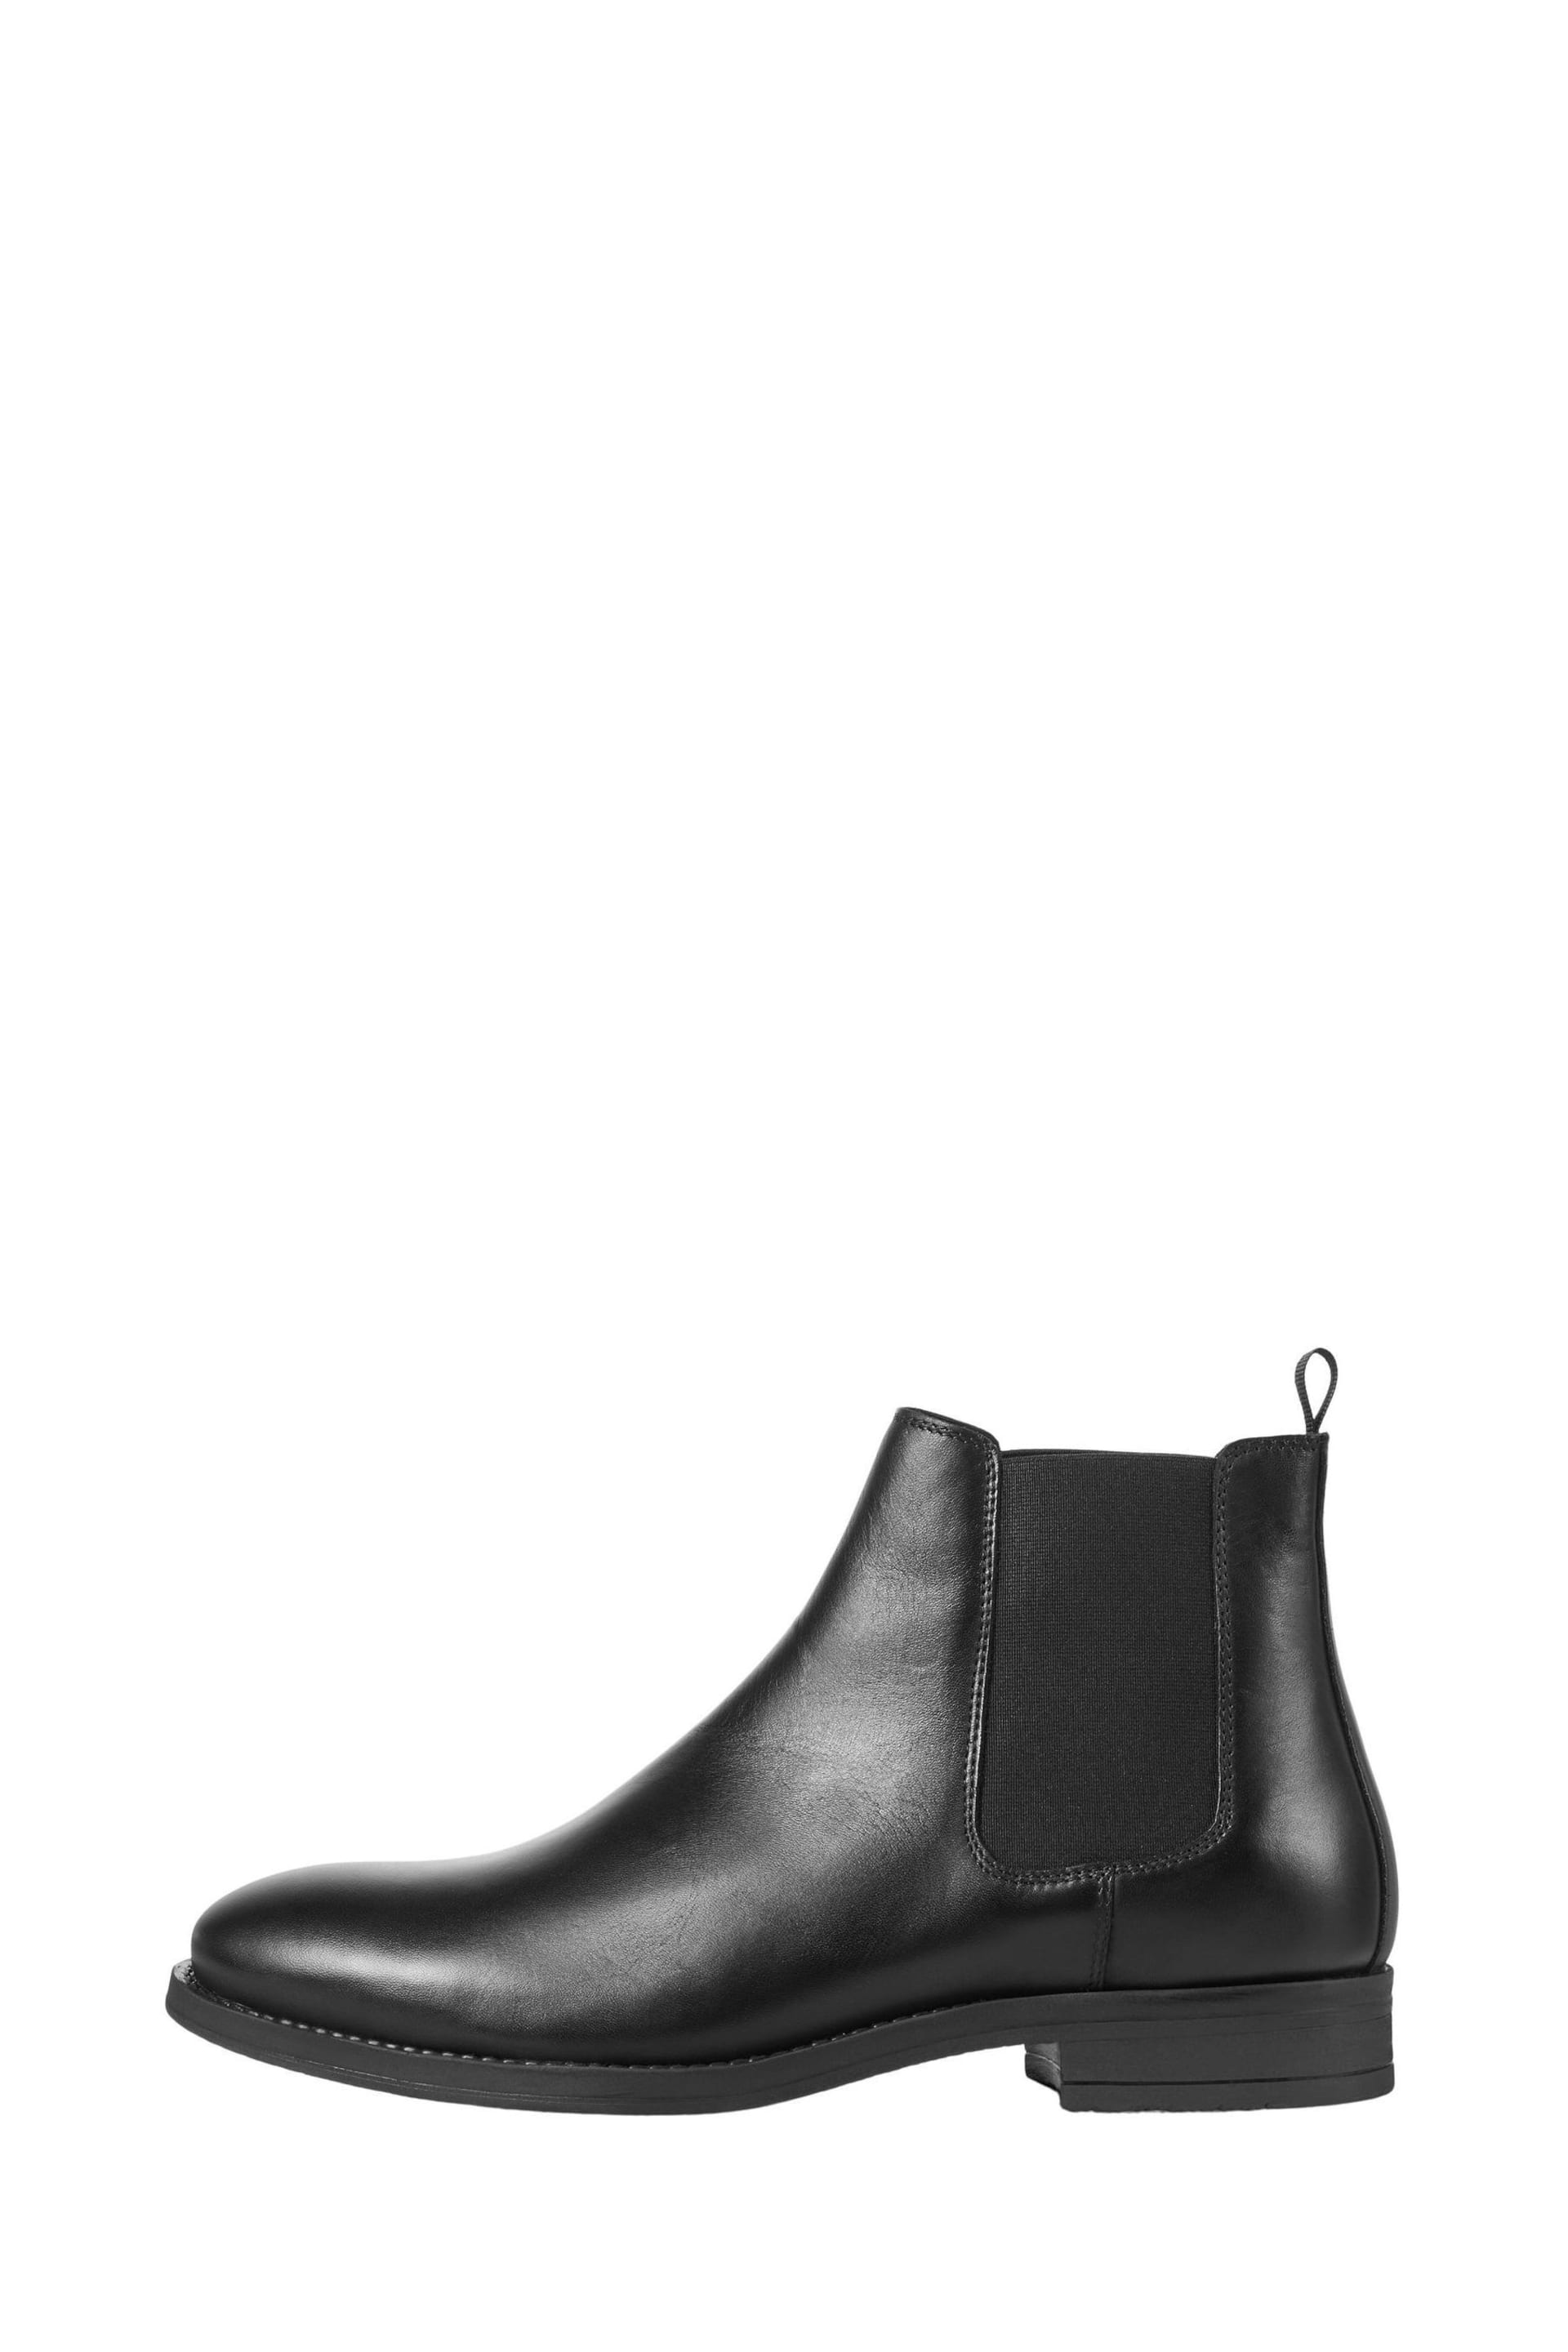 JACK & JONES Black Leather Chelsea Boot - Image 2 of 7